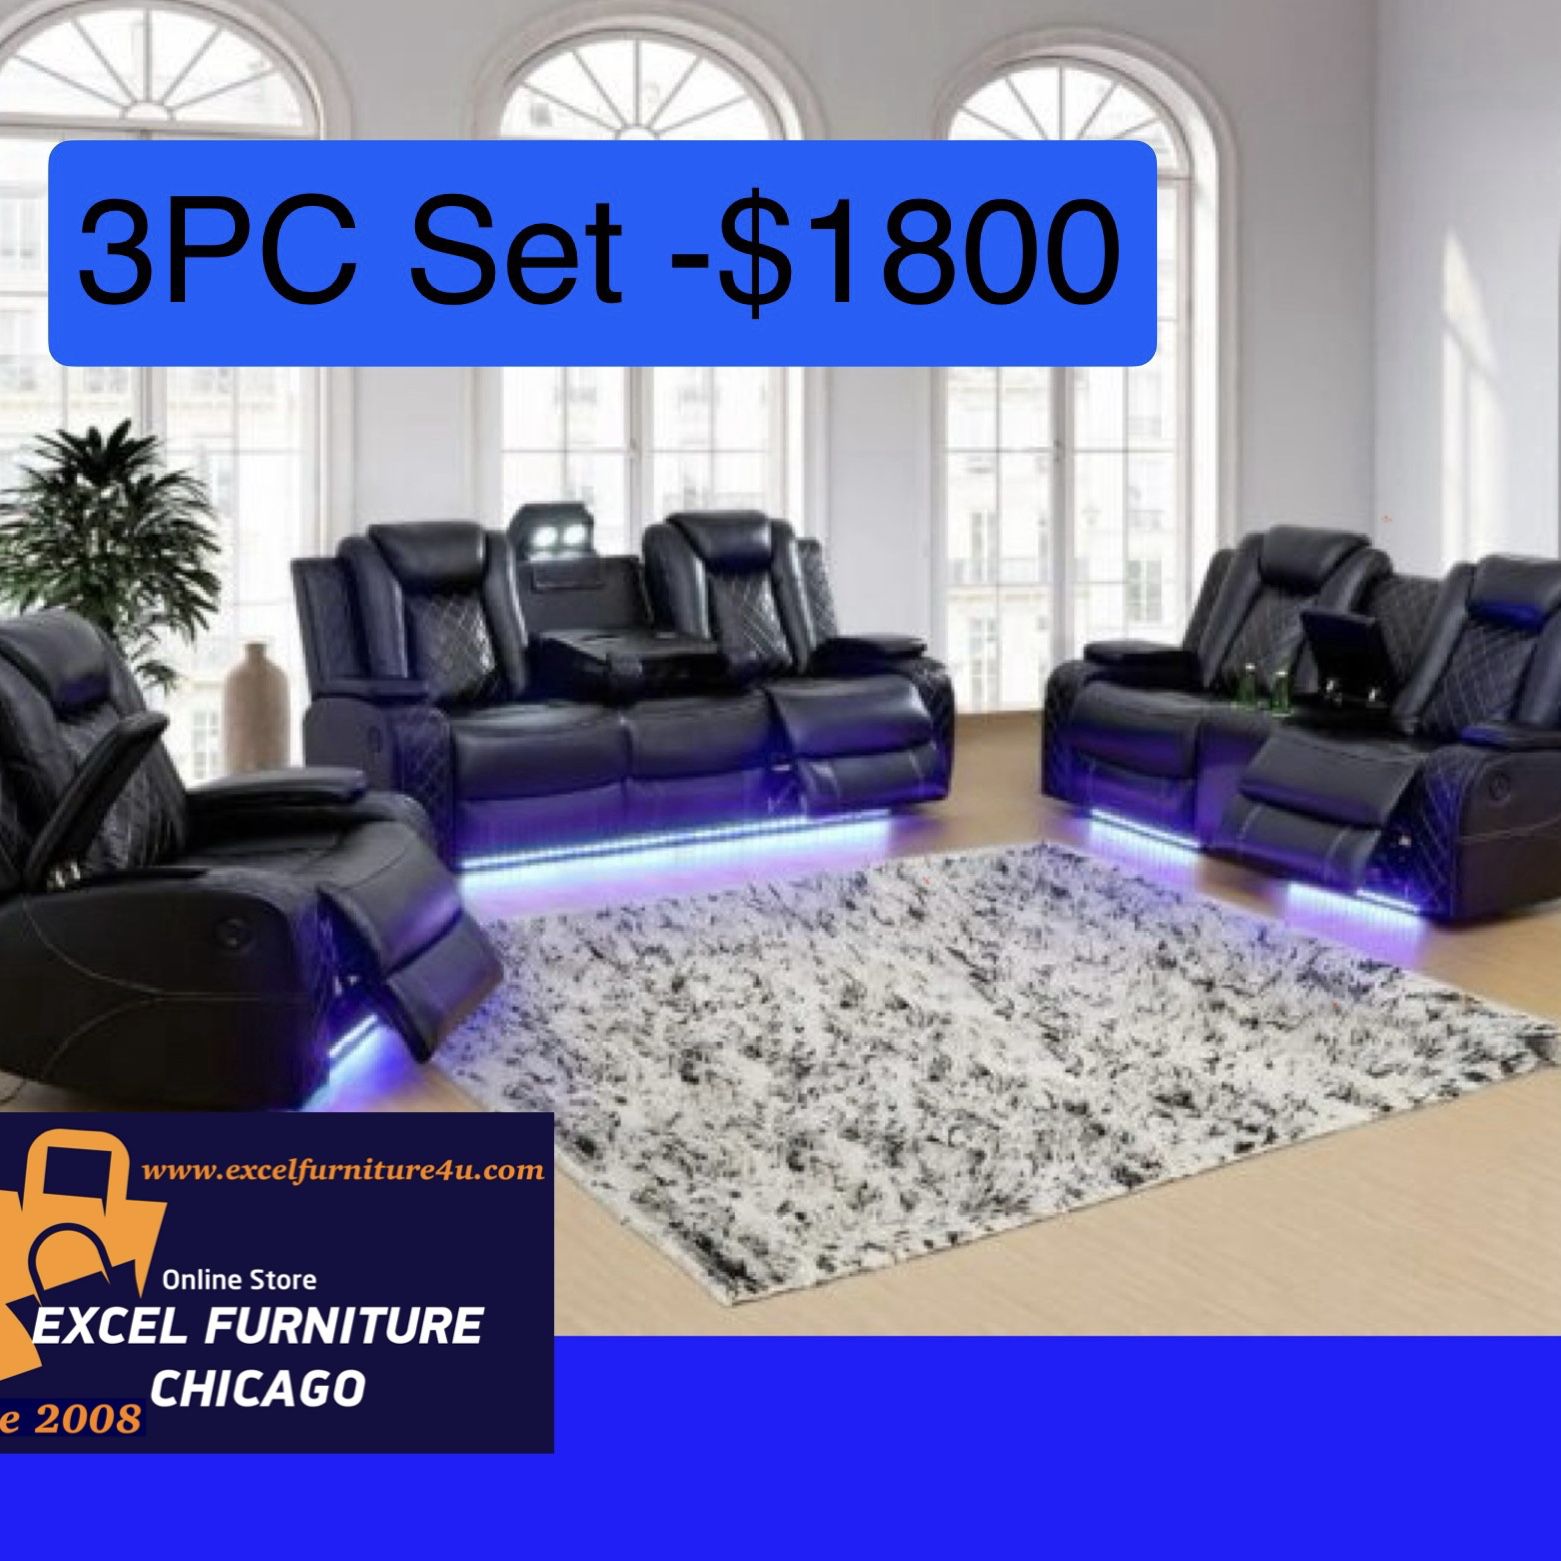 Brand New 3PC Power Reclining Sofa Loveseat Chair Set 